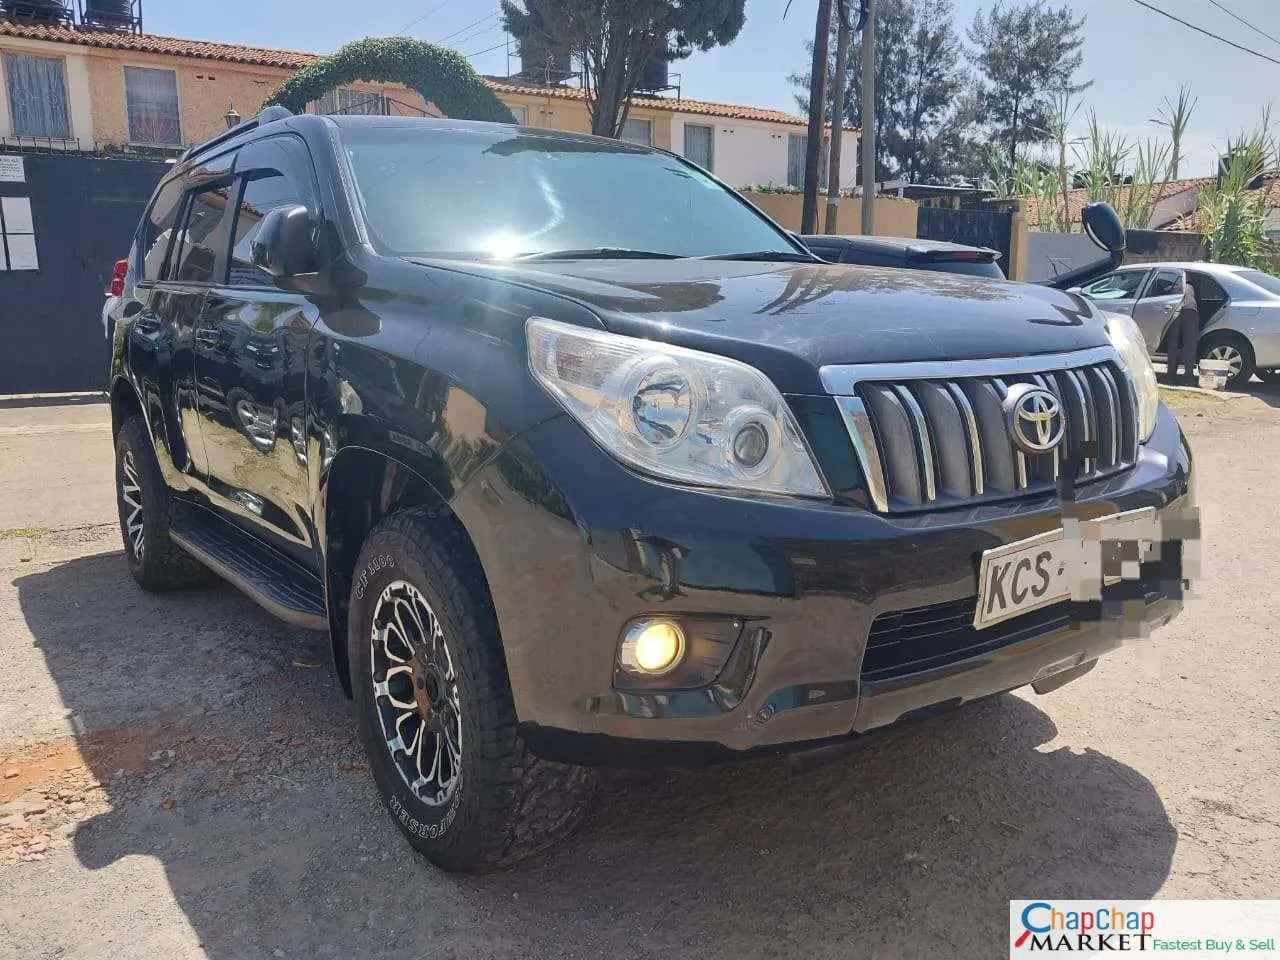 Toyota Prado J150 2.6M ONLY Kenya 🔥 You Pay 40% Deposit Trade in OK EXCLUSIVE Toyota Prado j120 for sale in kenya hire purchase installments Hire purchase installments